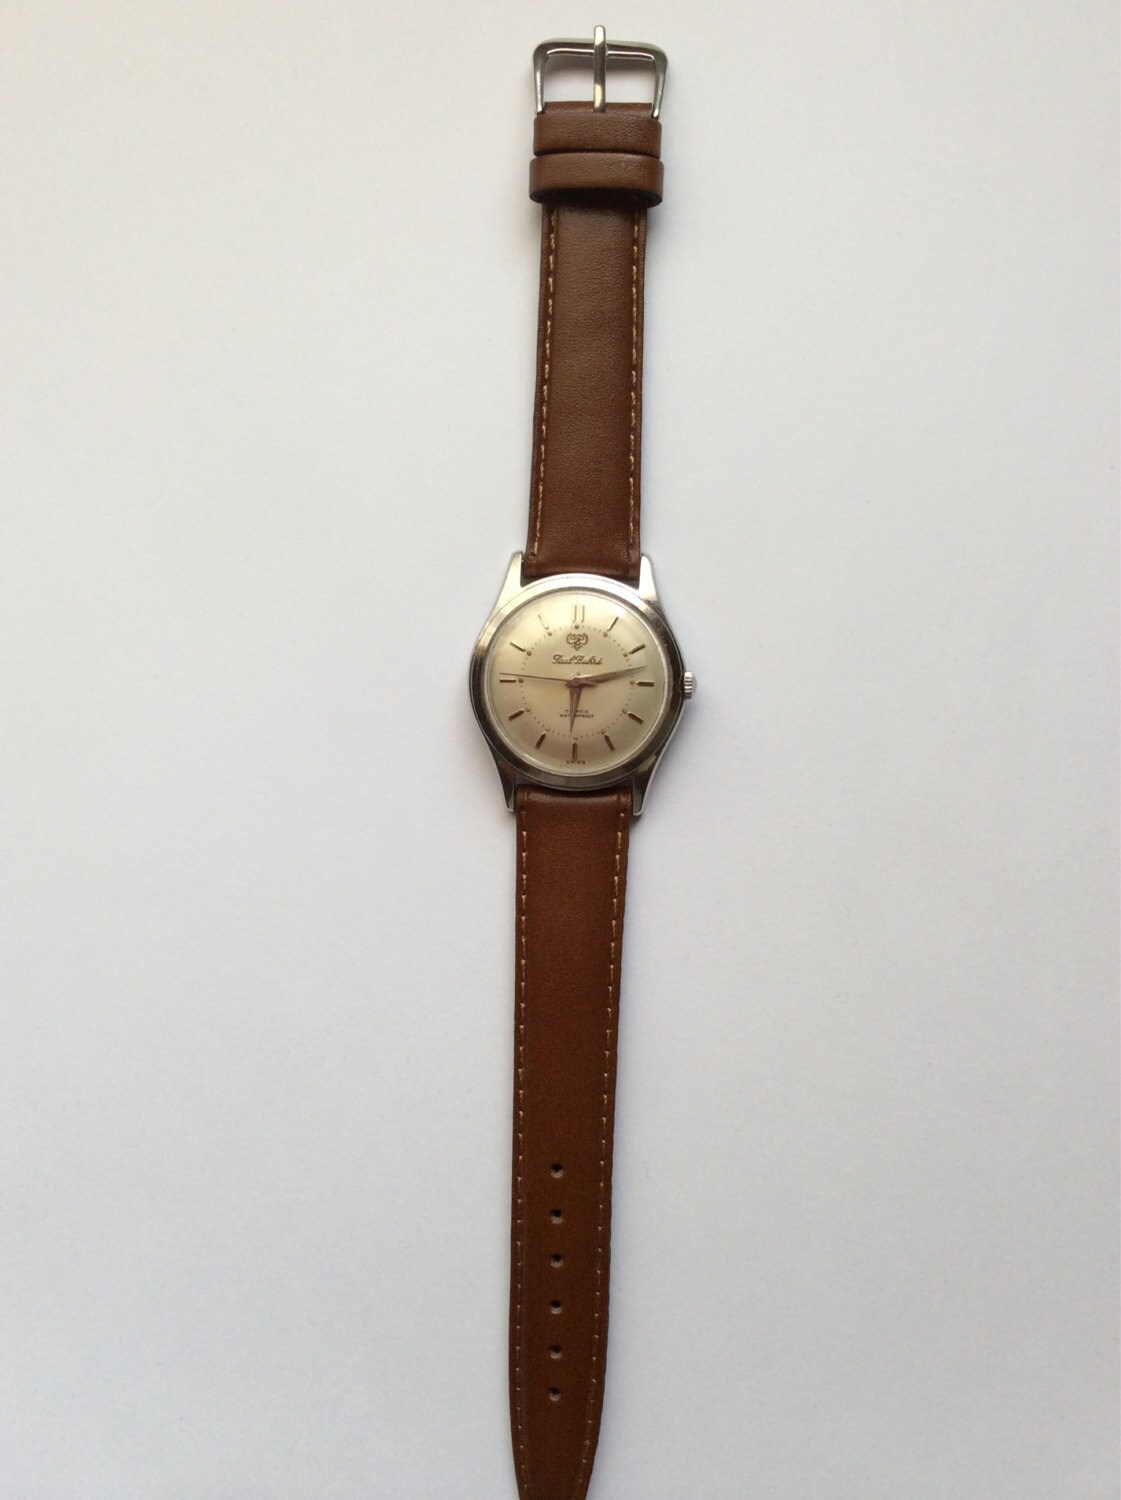 Paul Buhre Men's Wrist Watch Swiss Made Very Rare Pavel